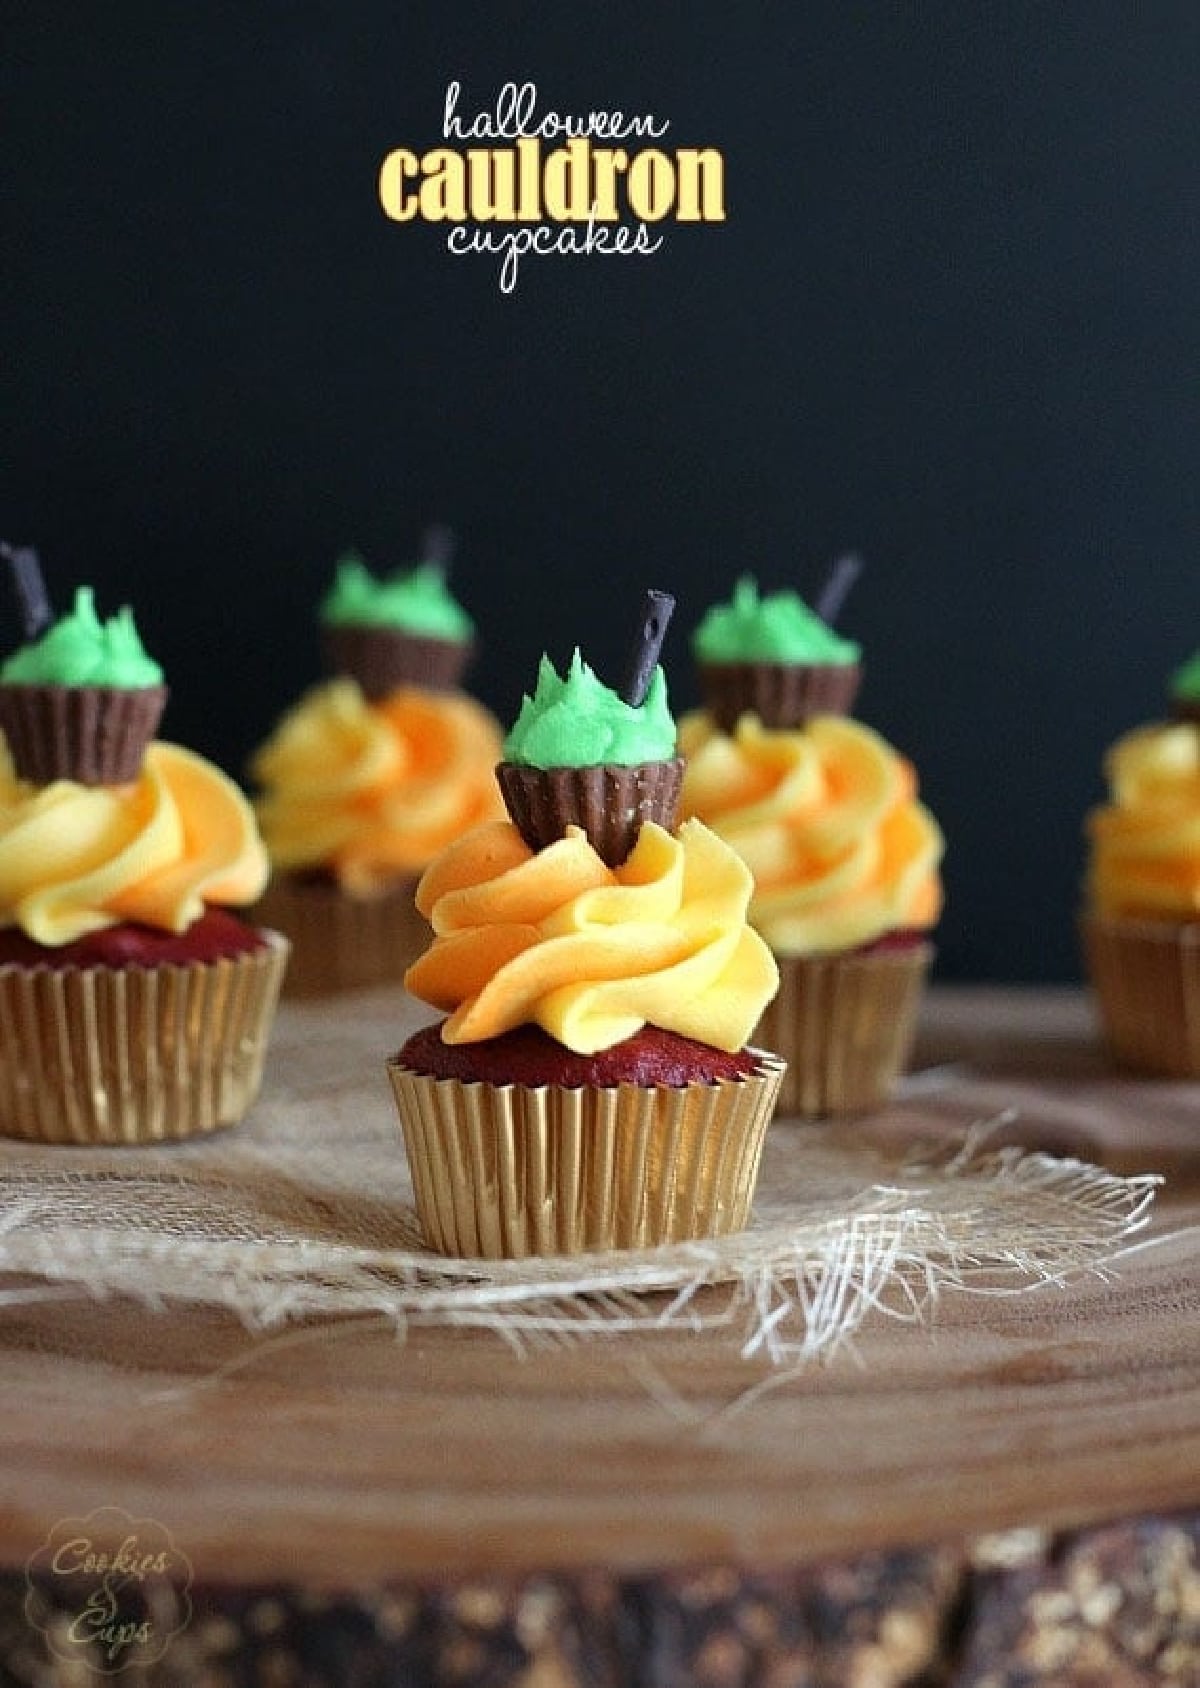 Halloween Cauldron Cupcakes